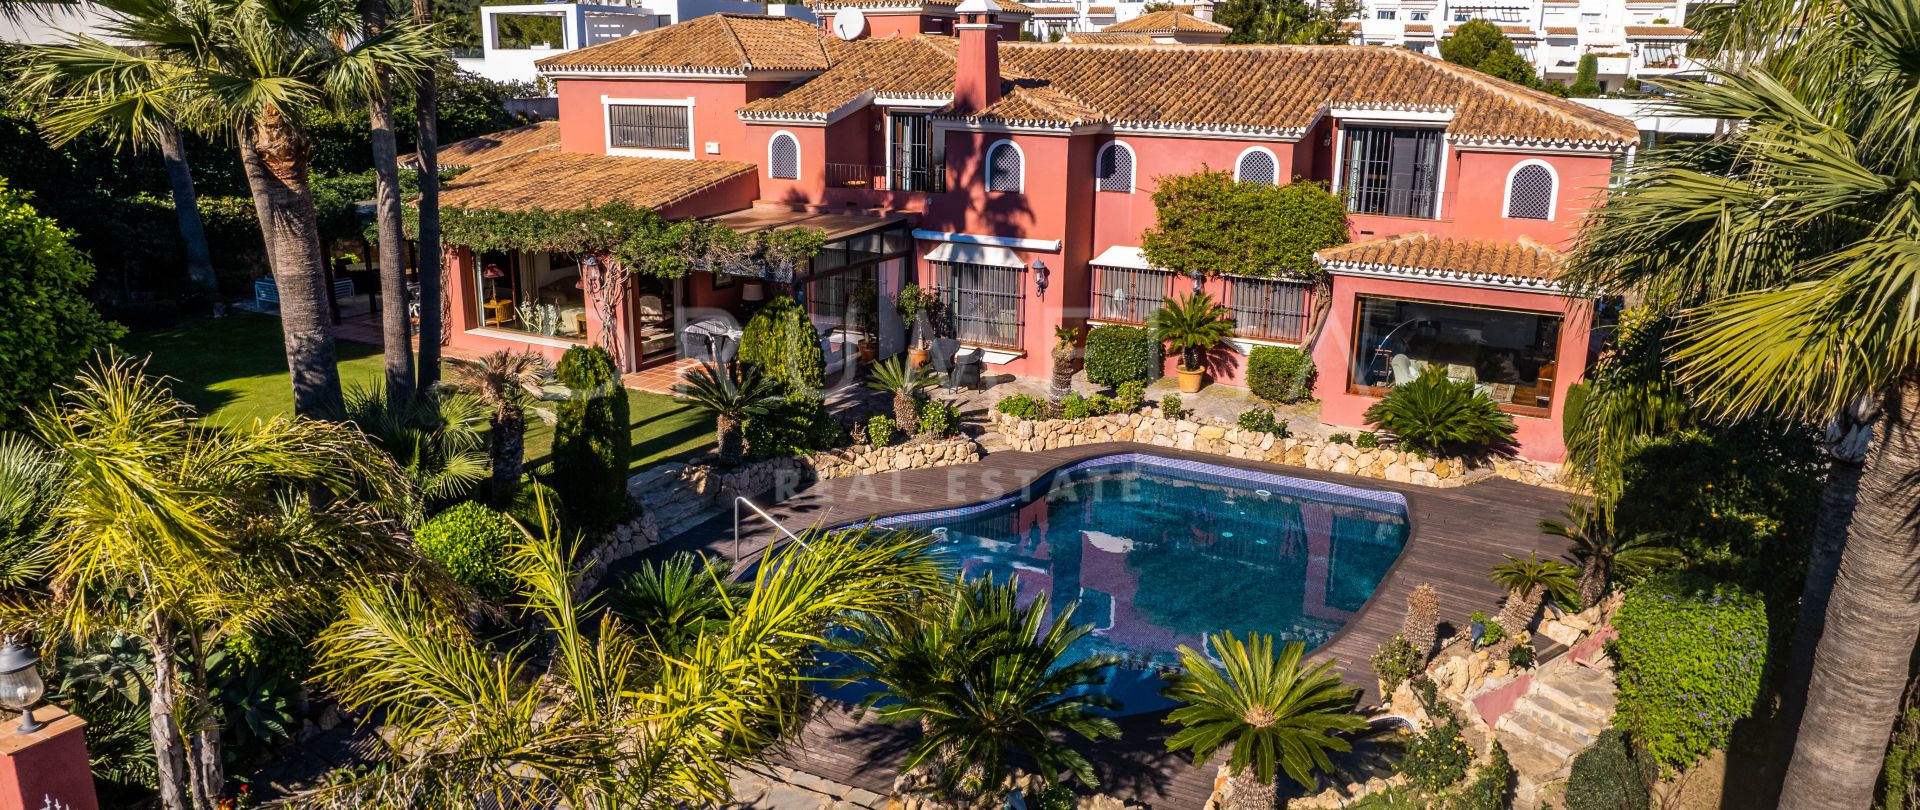 Splendide villa à vendre au cœur de la Golf Valley, Nueva Andalucia, Marbella.